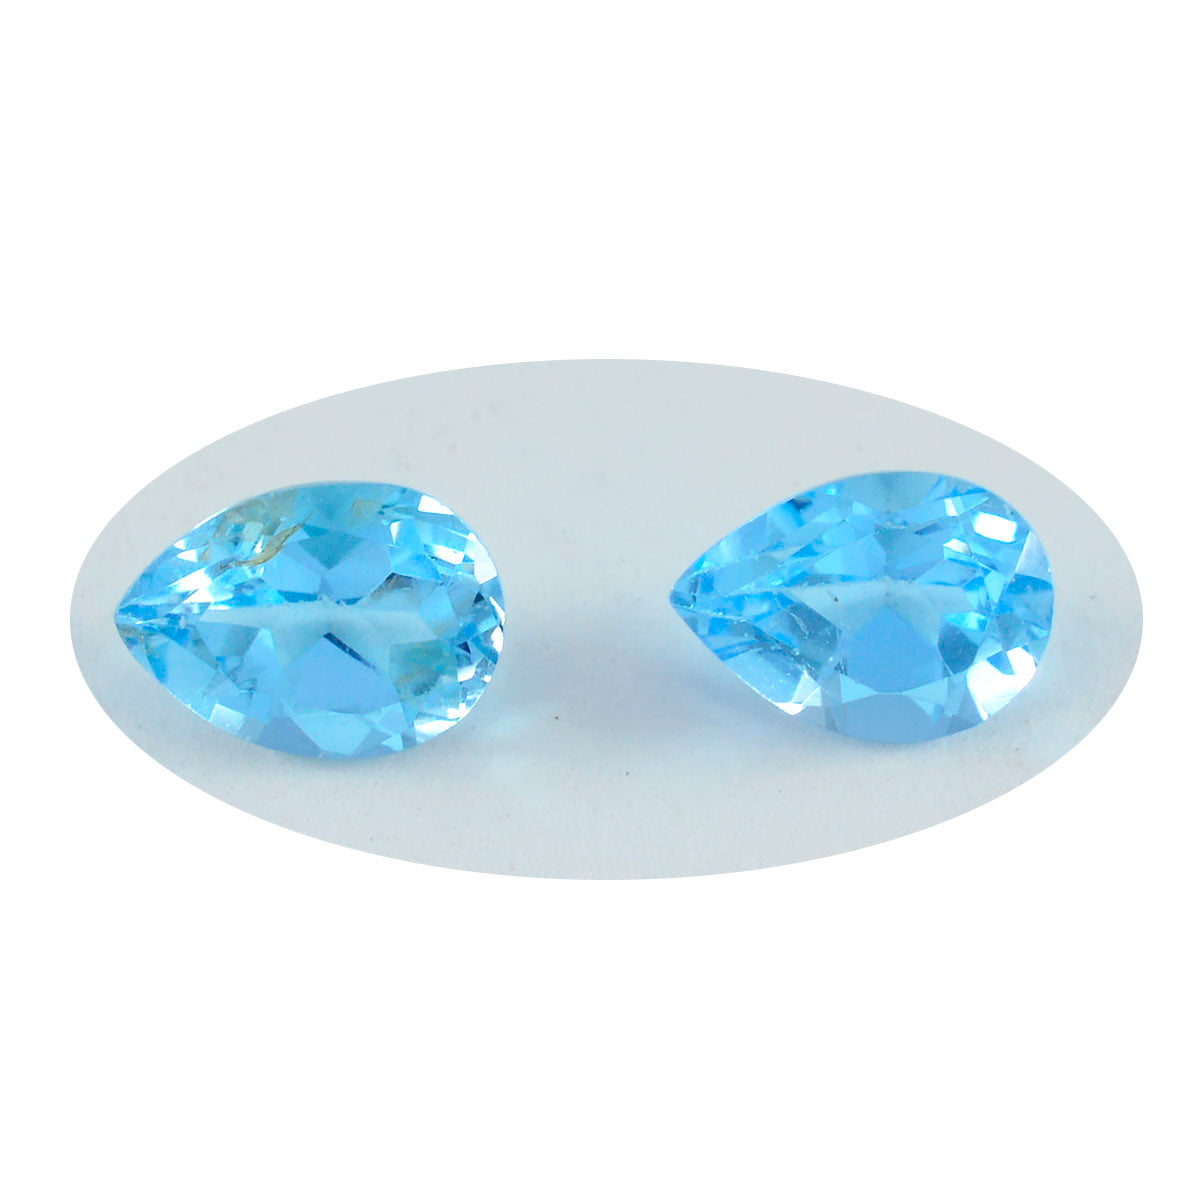 Riyogems 1PC Real Blue Topaz Faceted 6x9 mm Pear Shape pretty Quality Loose Gems